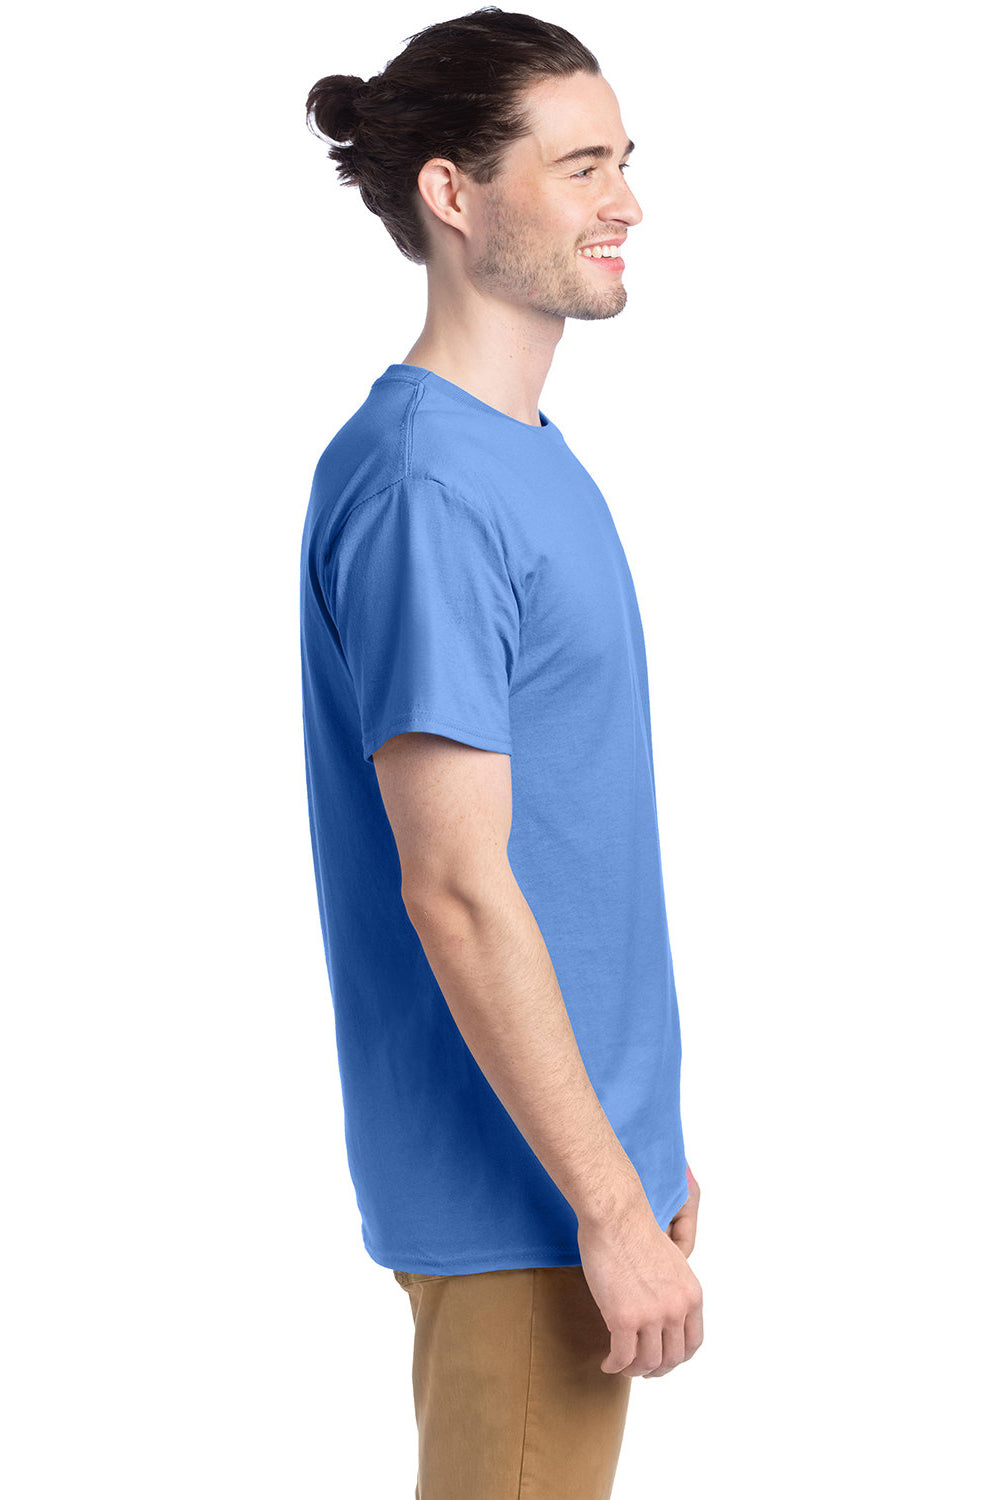 Hanes 5280 Mens ComfortSoft Short Sleeve Crewneck T-Shirt Carolina Blue SIde